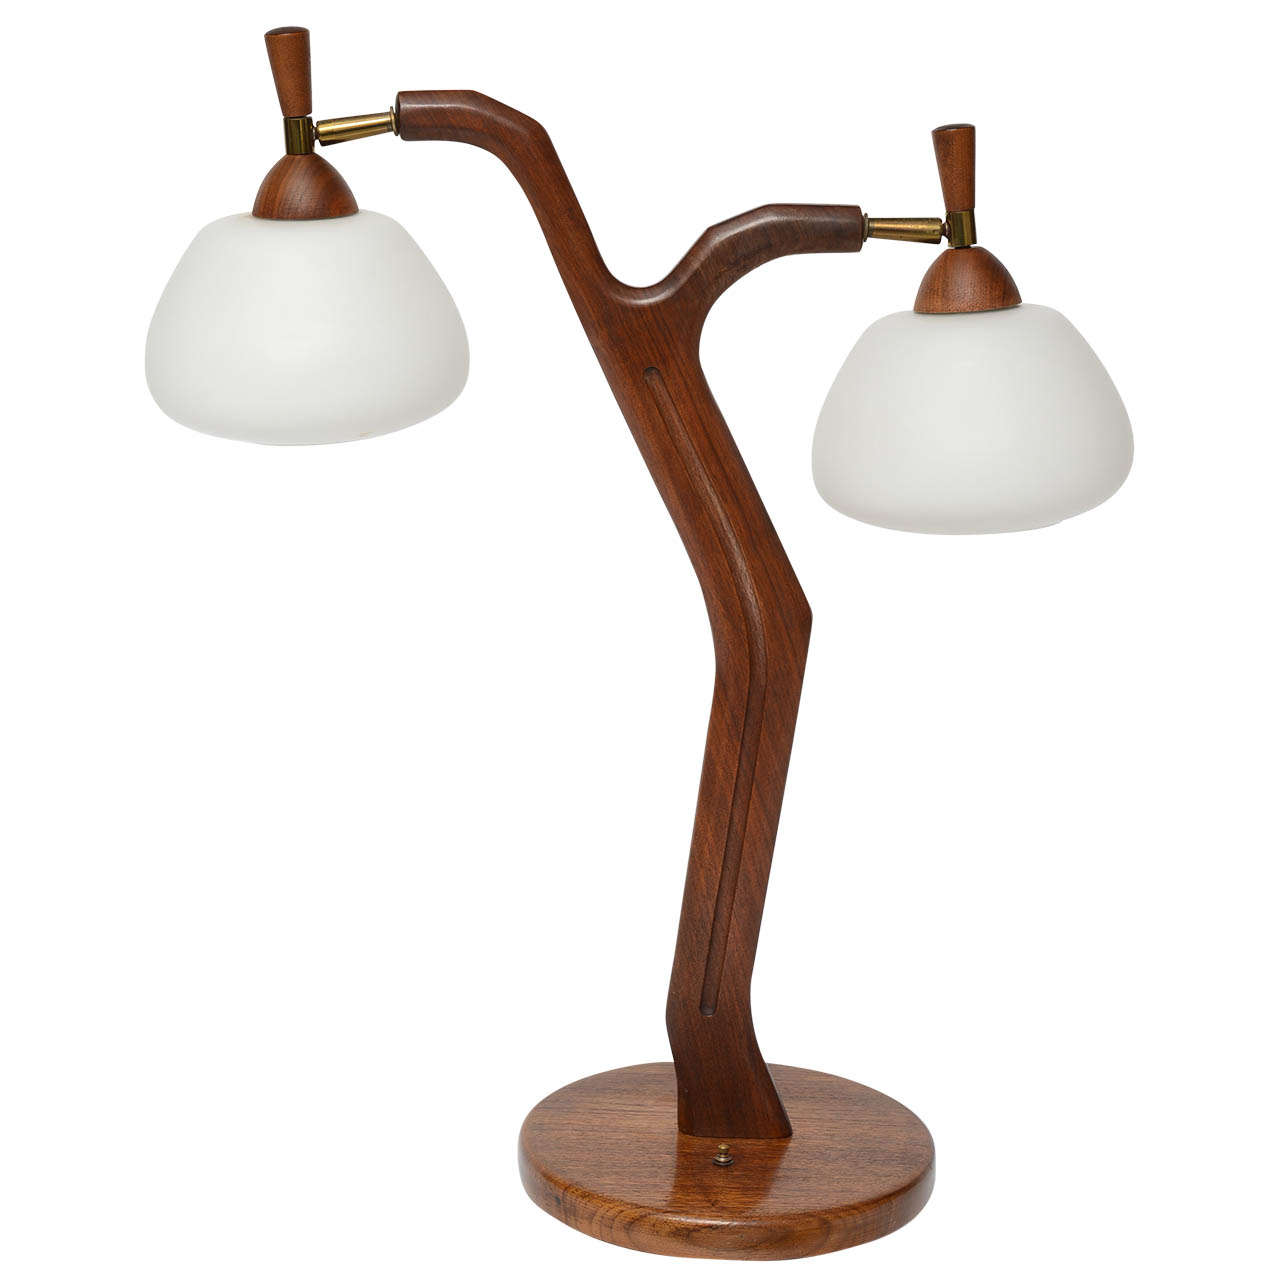 Strong Statement, Dramatic  Rare Scandinavian Wooden Table Lamp